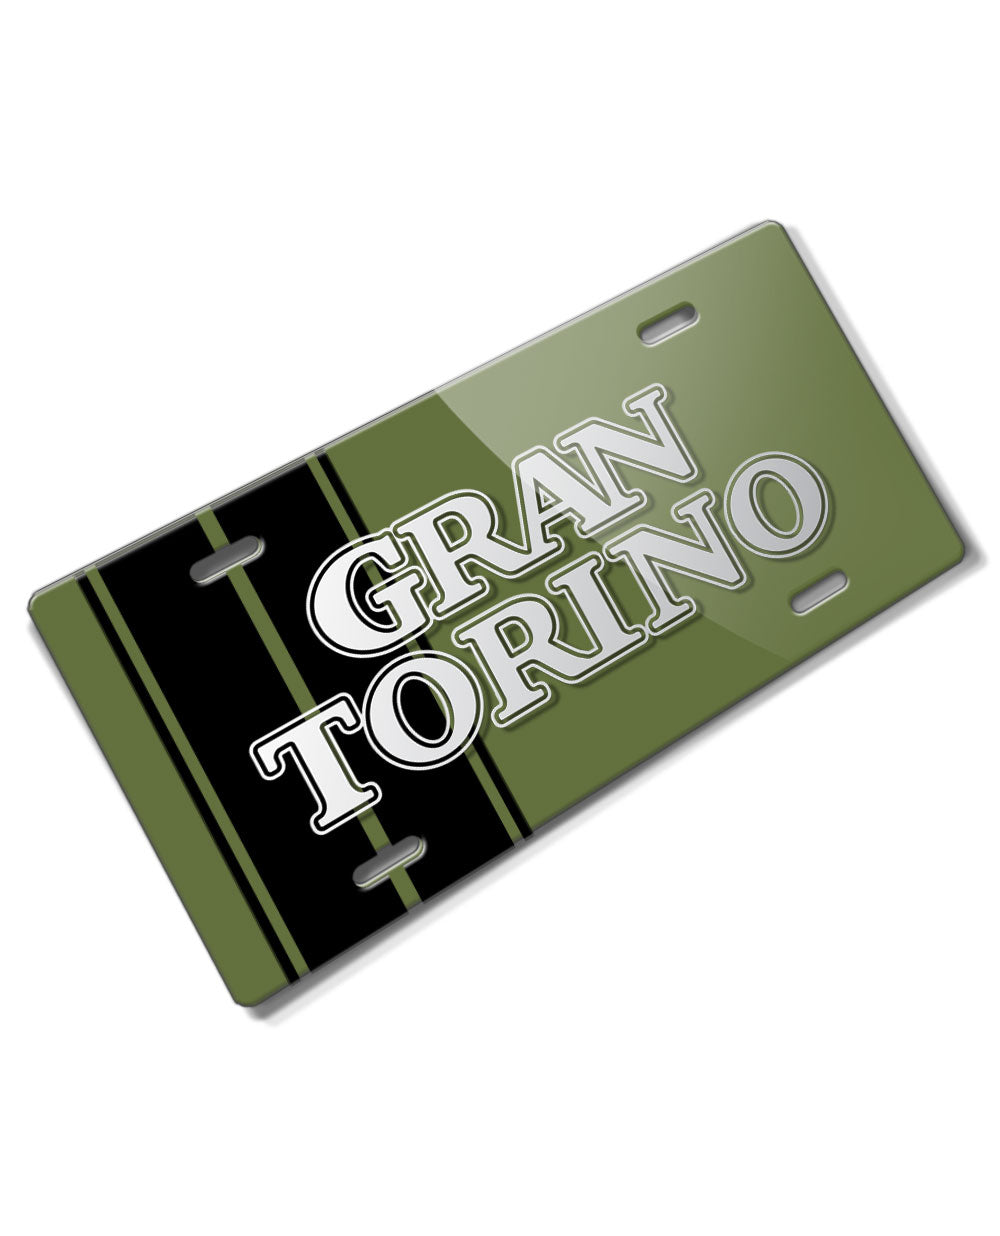 Ford Gran Torino 1972 - 1975 Emblem Novelty License Plate